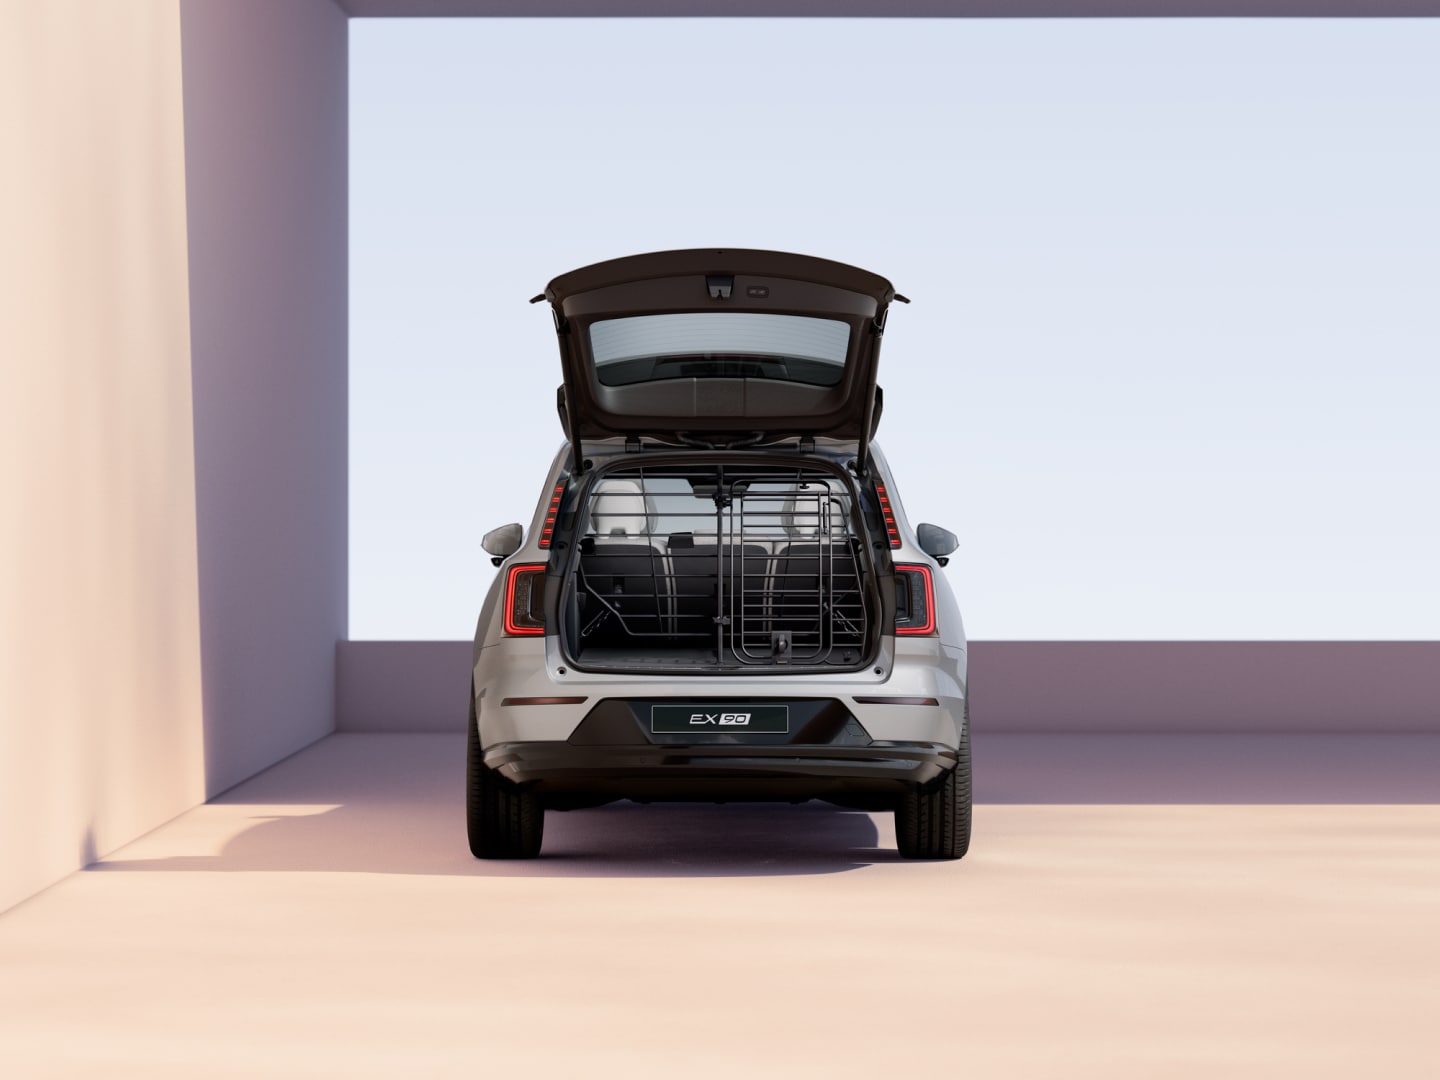 Zaštitna čelična rešetka u stražnjem prtljažniku modela Volvo EX90.